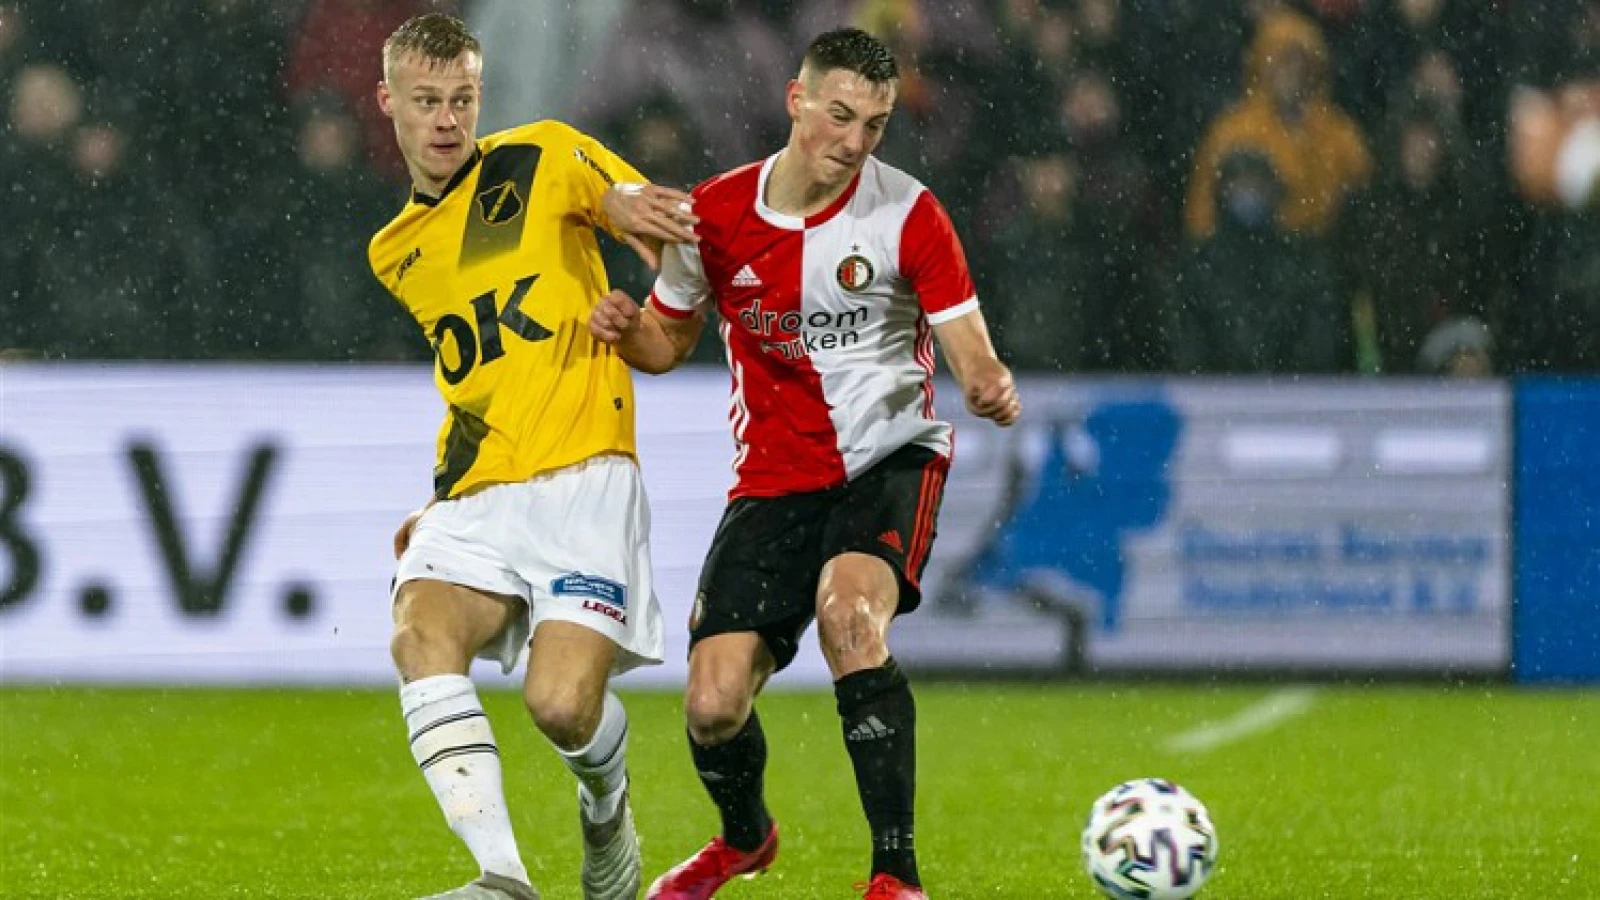 Toekomst Feyenoordtarget onzeker: 'Nog geen overeenstemming'